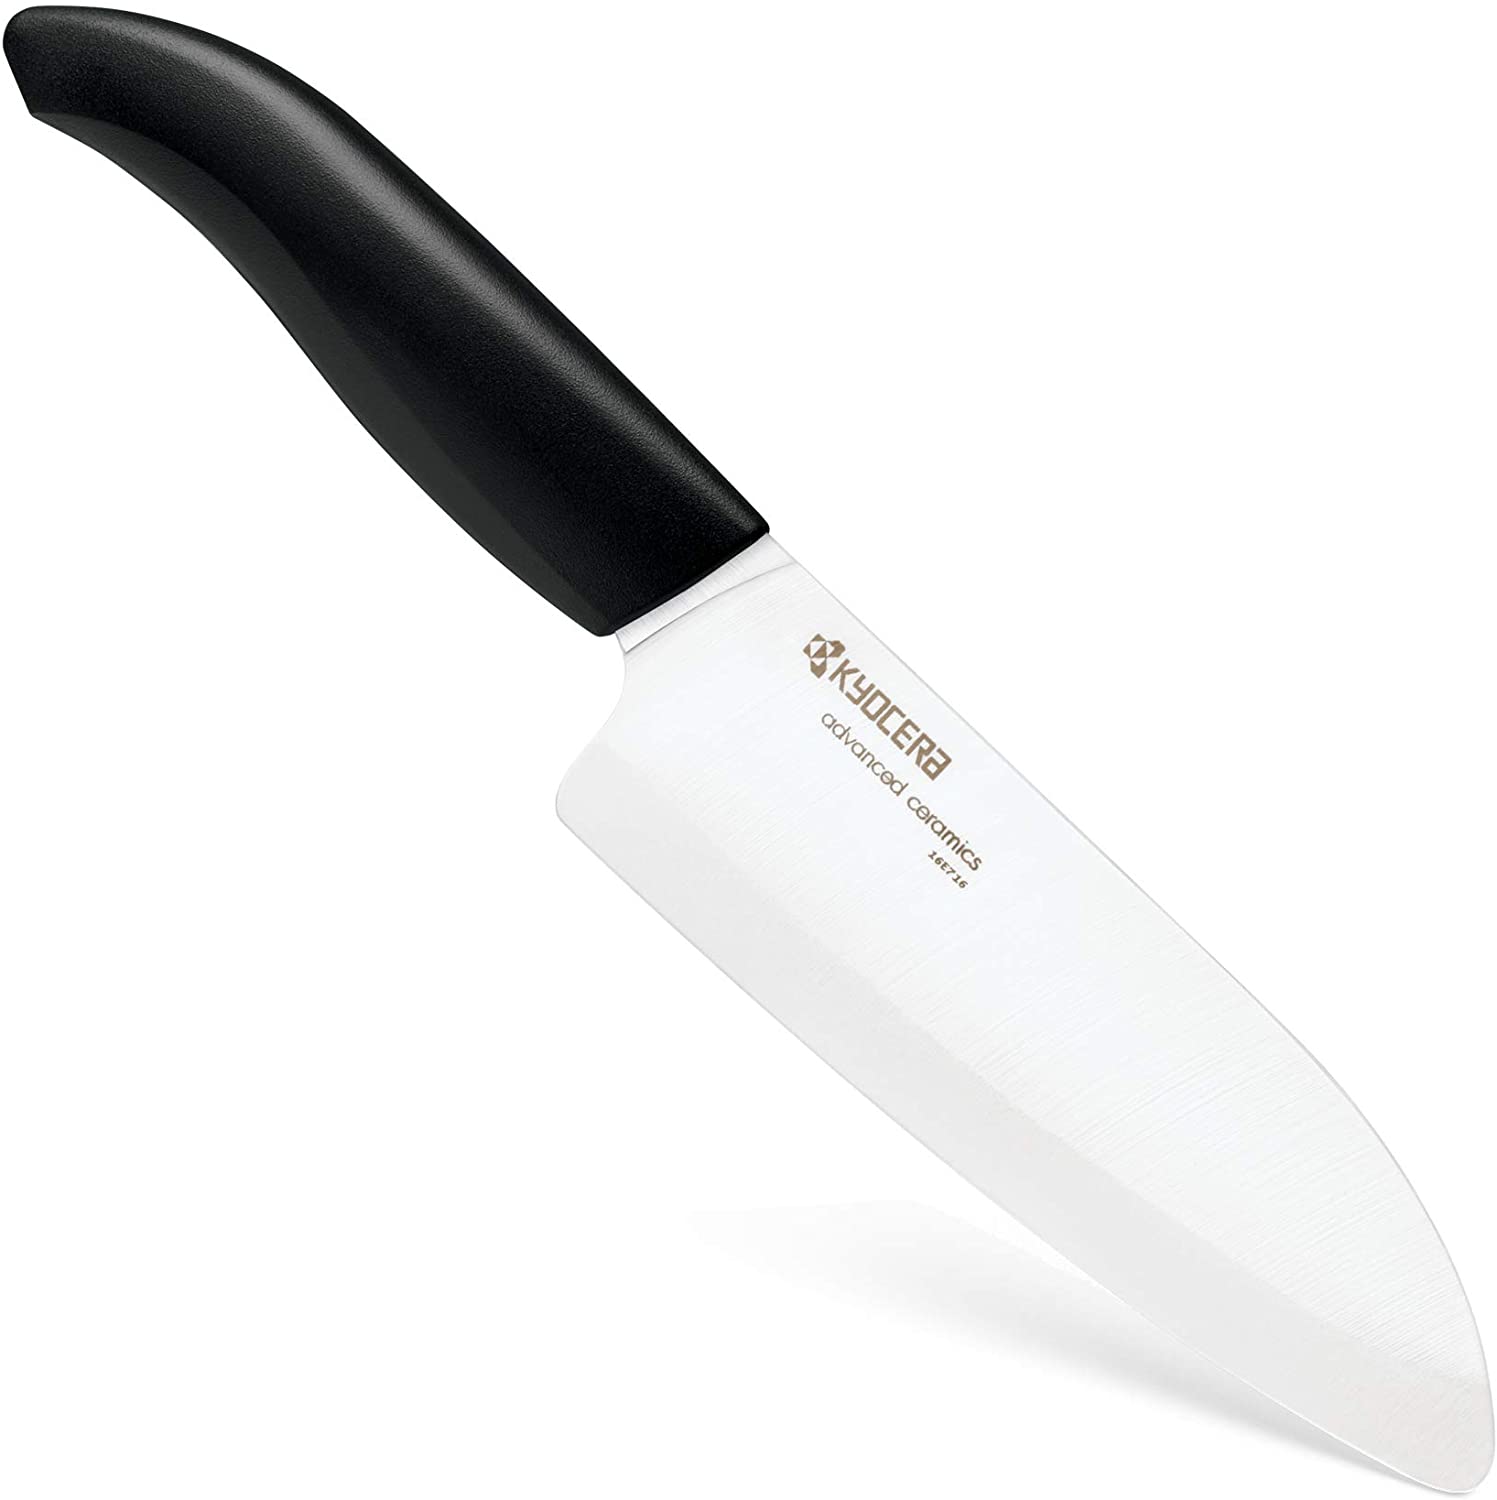 Kyocera Advanced Ceramic Revolution Series 5-1/2-inch Santoku Knife, Black Handle, White Blade - $33